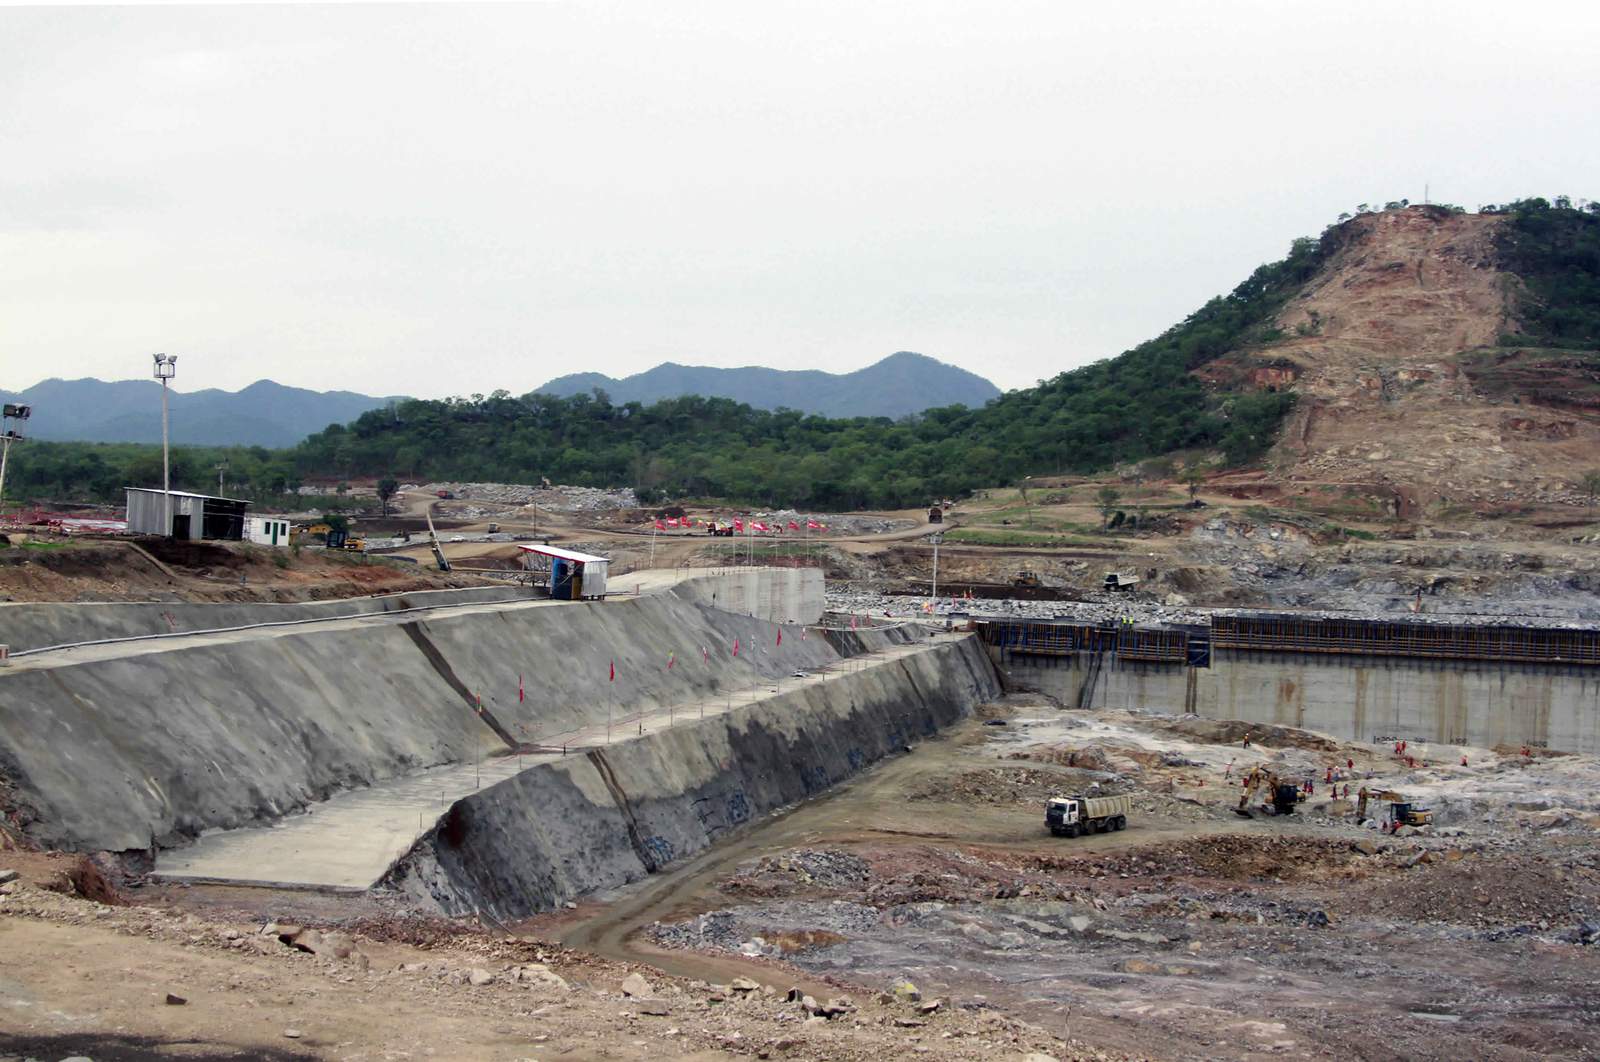 Egypt: Ethiopia rejecting 'fundamental issues' on Nile dam